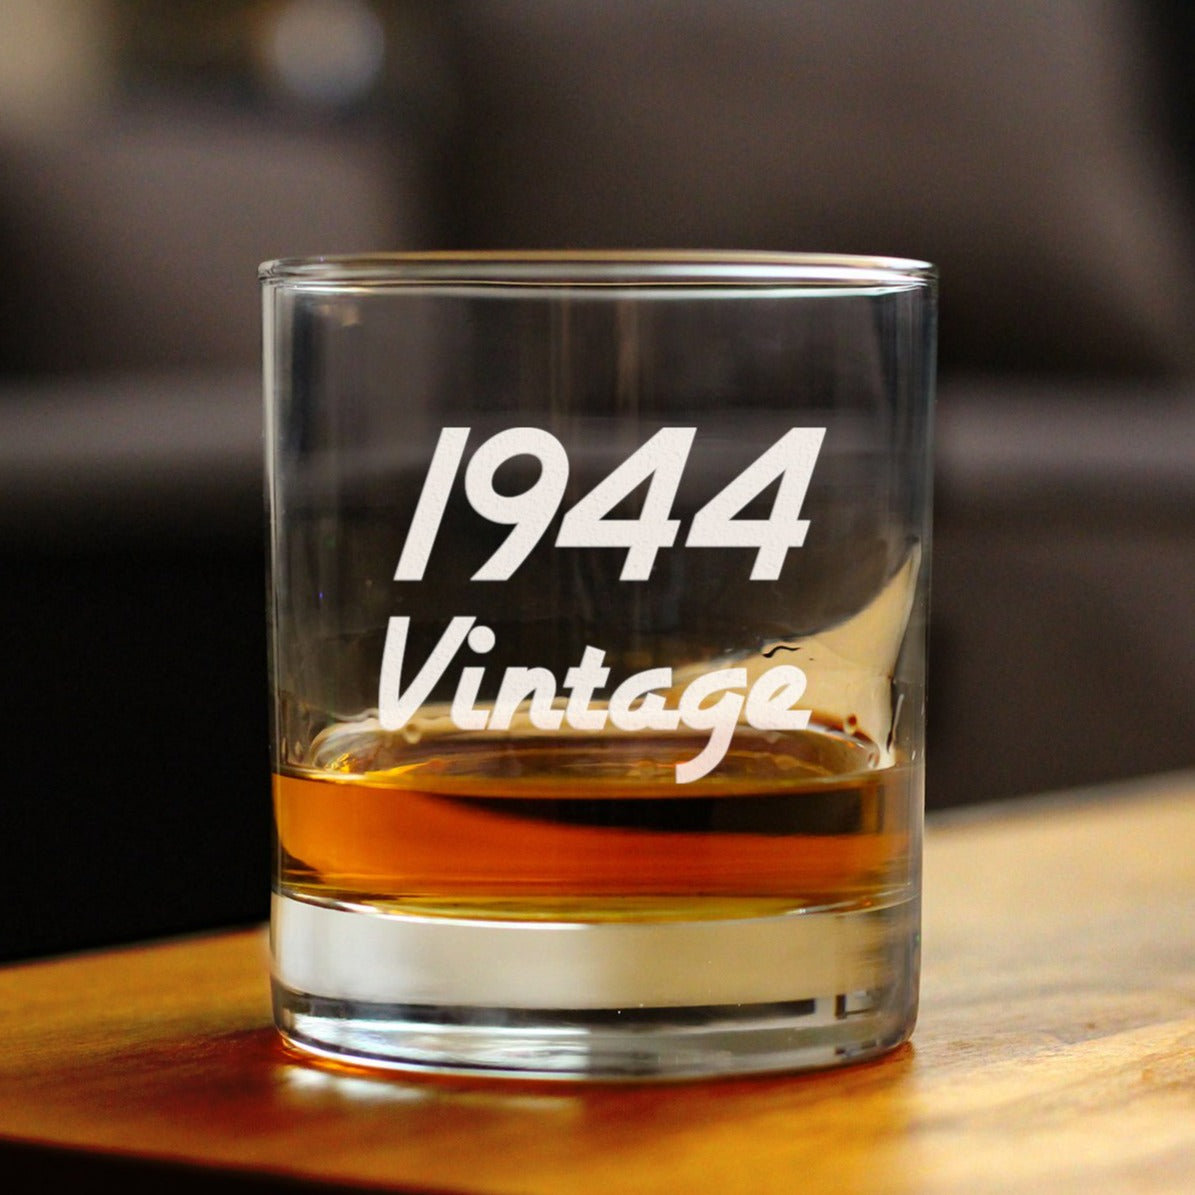 Vintage 1944 - Fun 79th Birthday Whiskey Rocks Glass Gifts for Men &amp; Women Turning 79 - Retro Whisky Drinking Tumbler